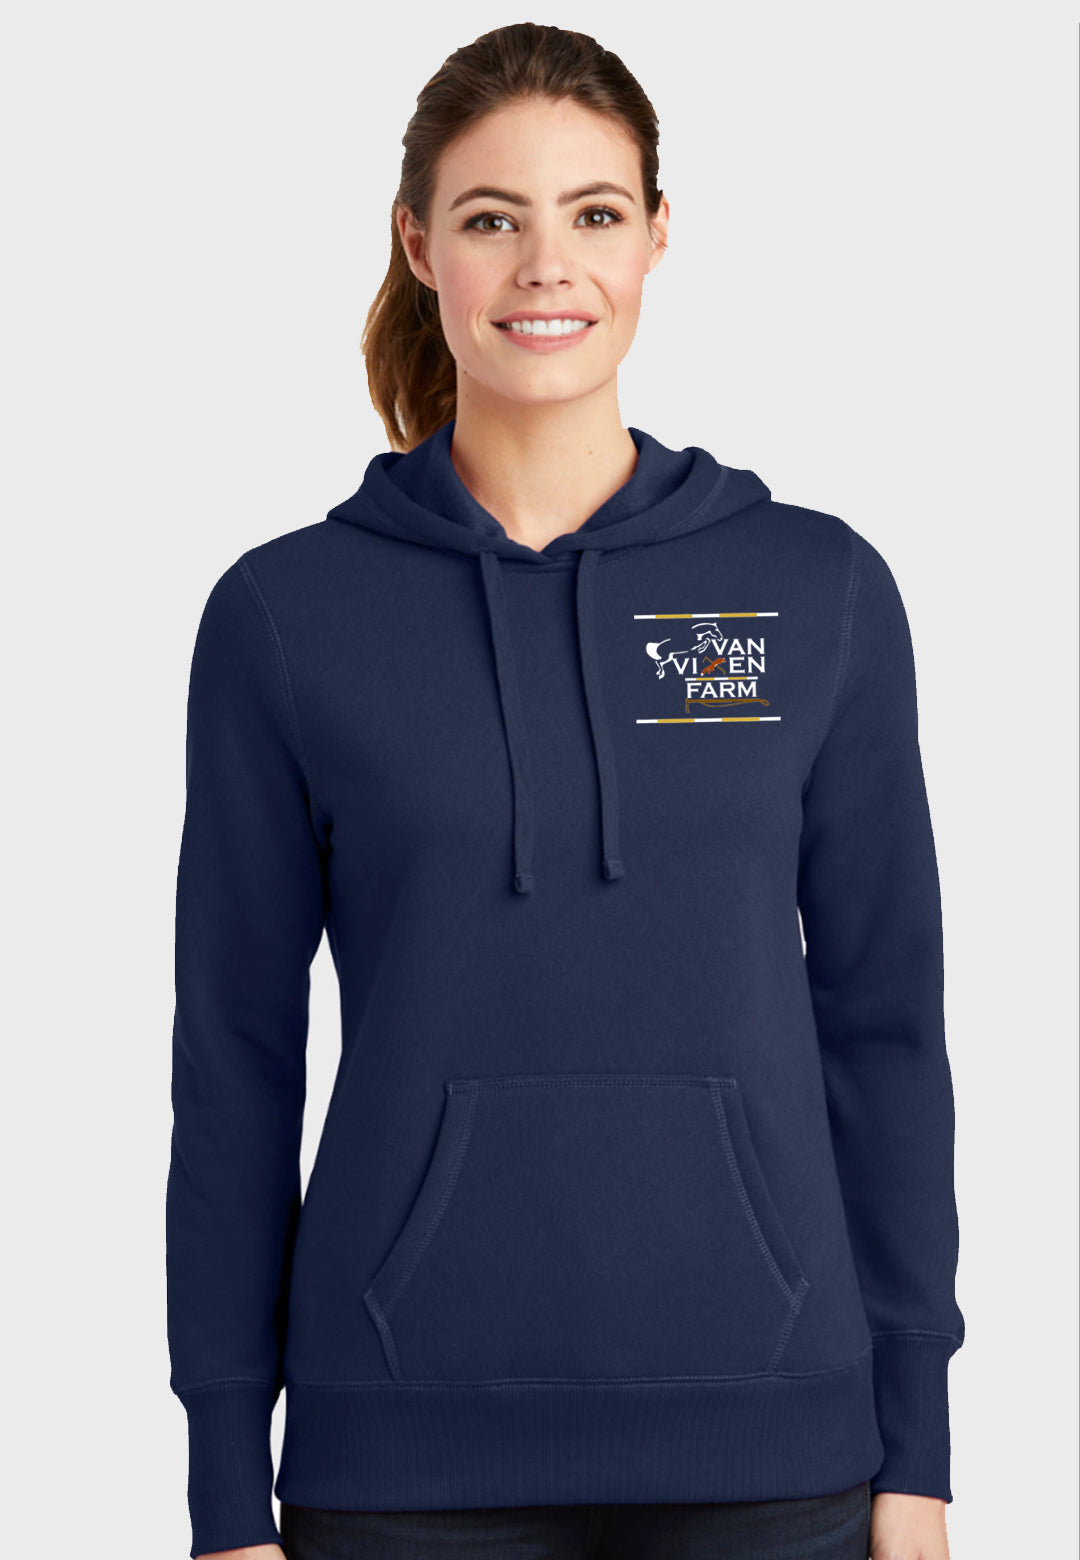 Van Vixen Farm Sport-Tek® Hooded Sweatshirt - Ladies/Mens/Youth Sizes